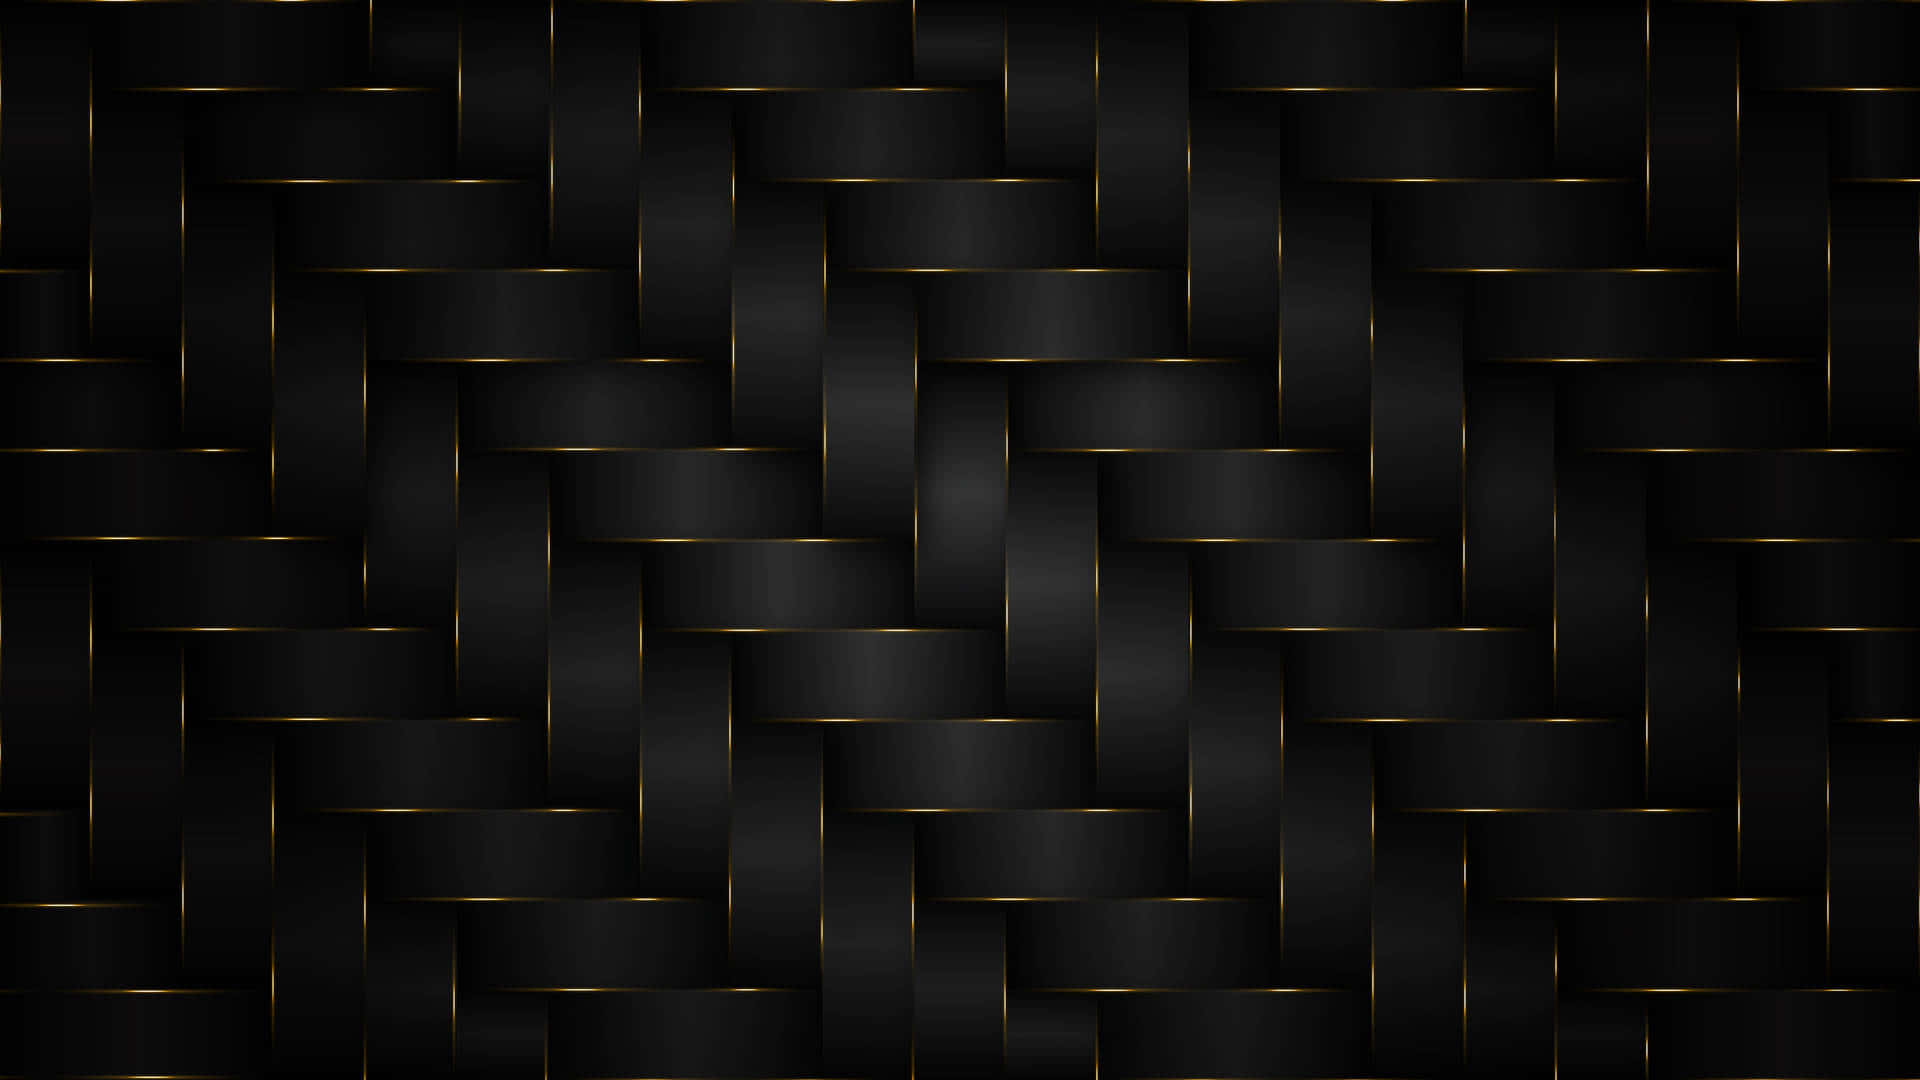 A modern dark abstract background